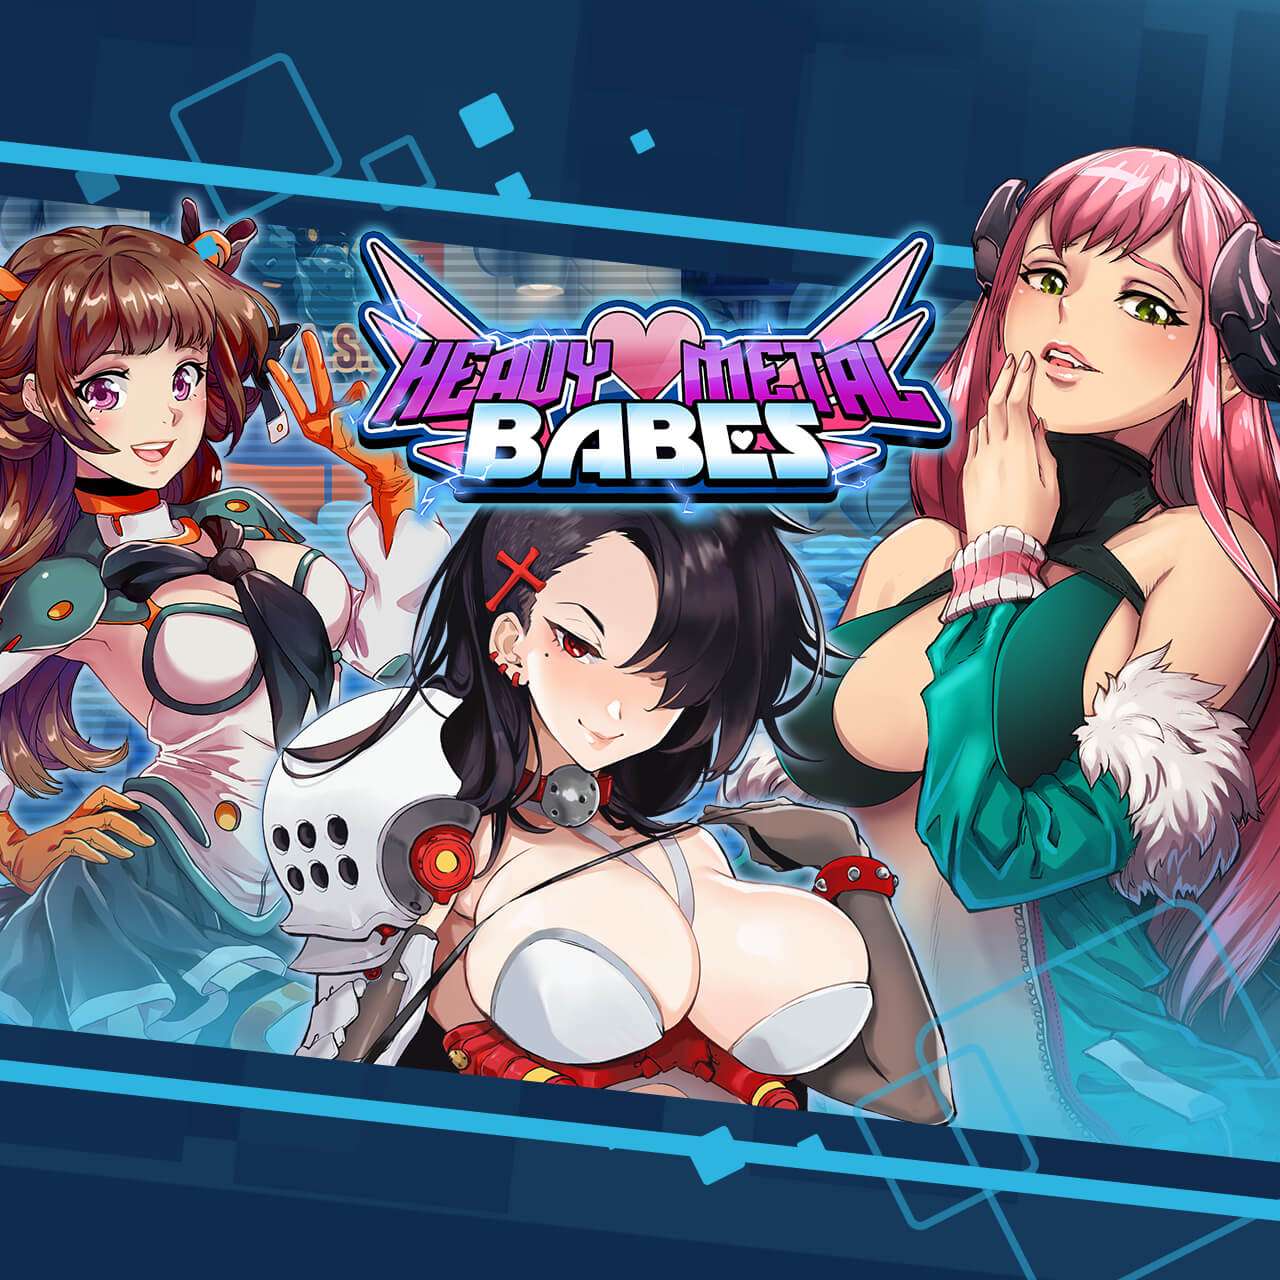 Heavy Metal Babes - Turn Based RPG Sex Game with APK file | Nutaku